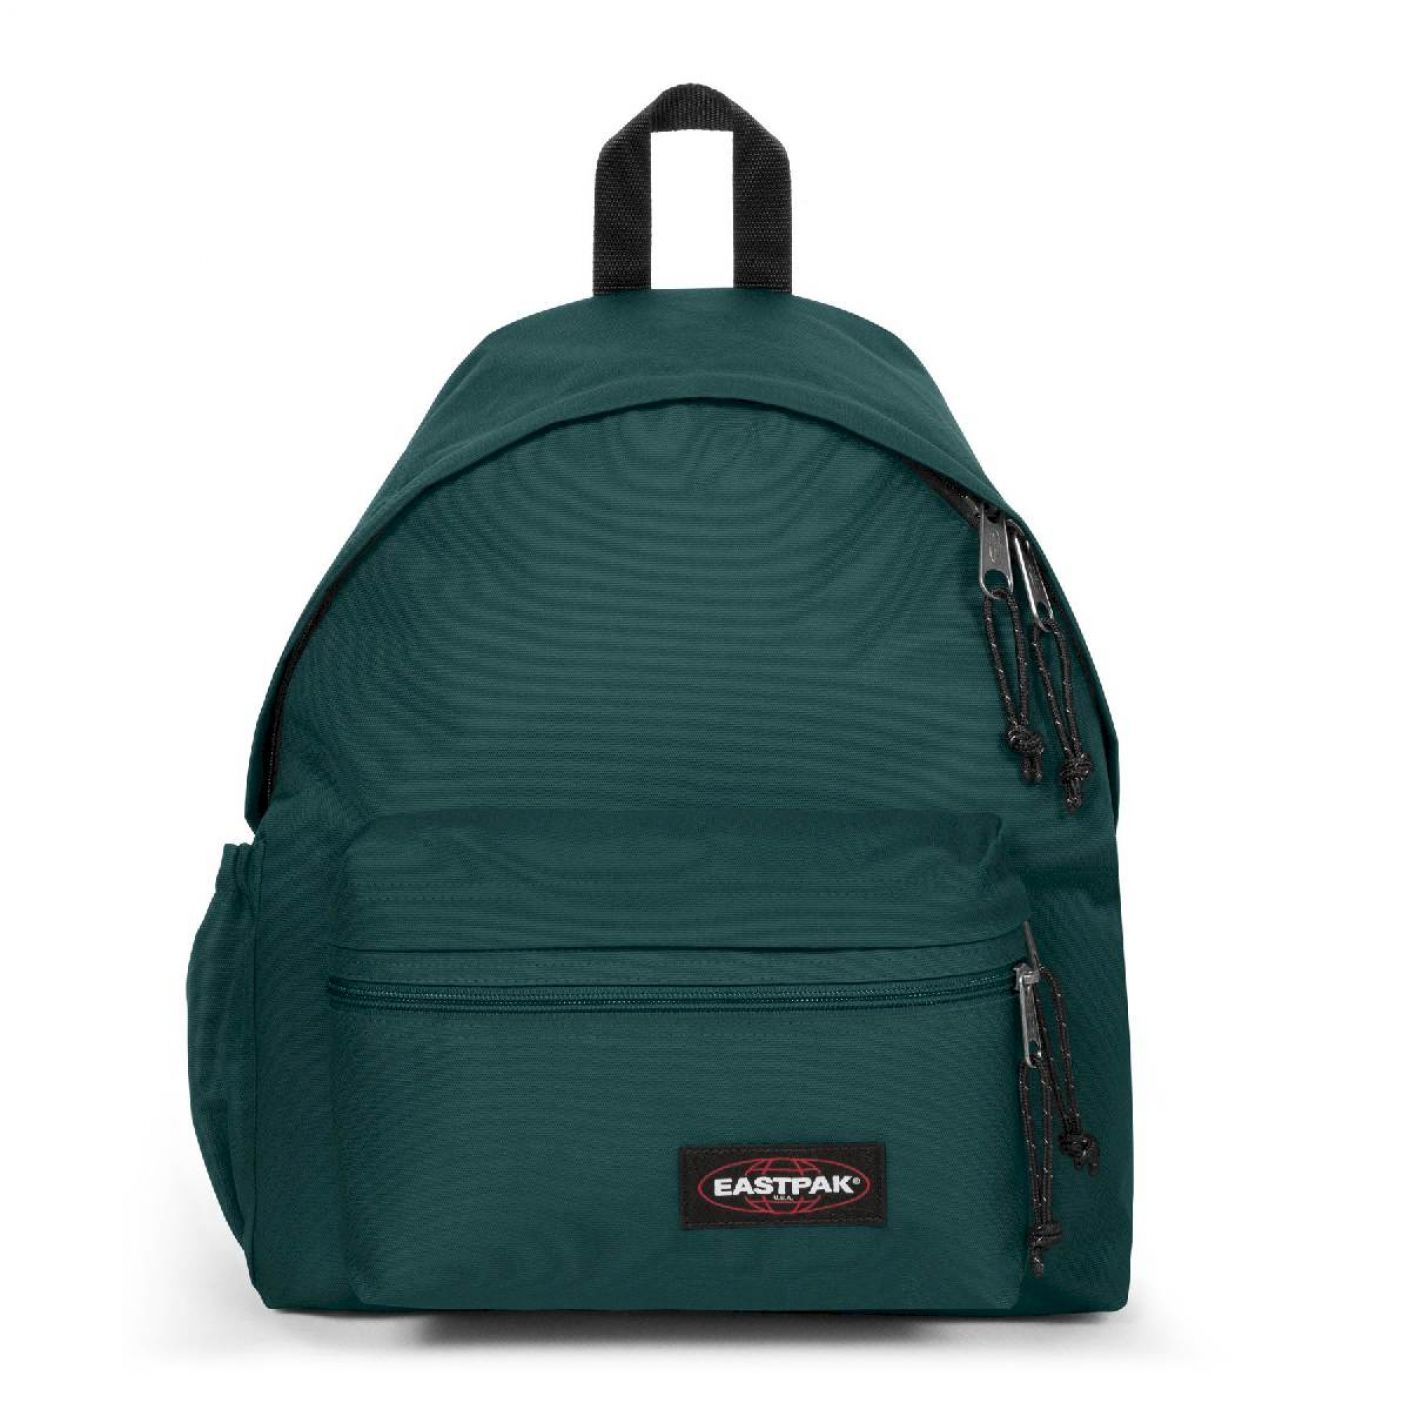 Eastpak Backpack Padded Zipplr Emerald Green